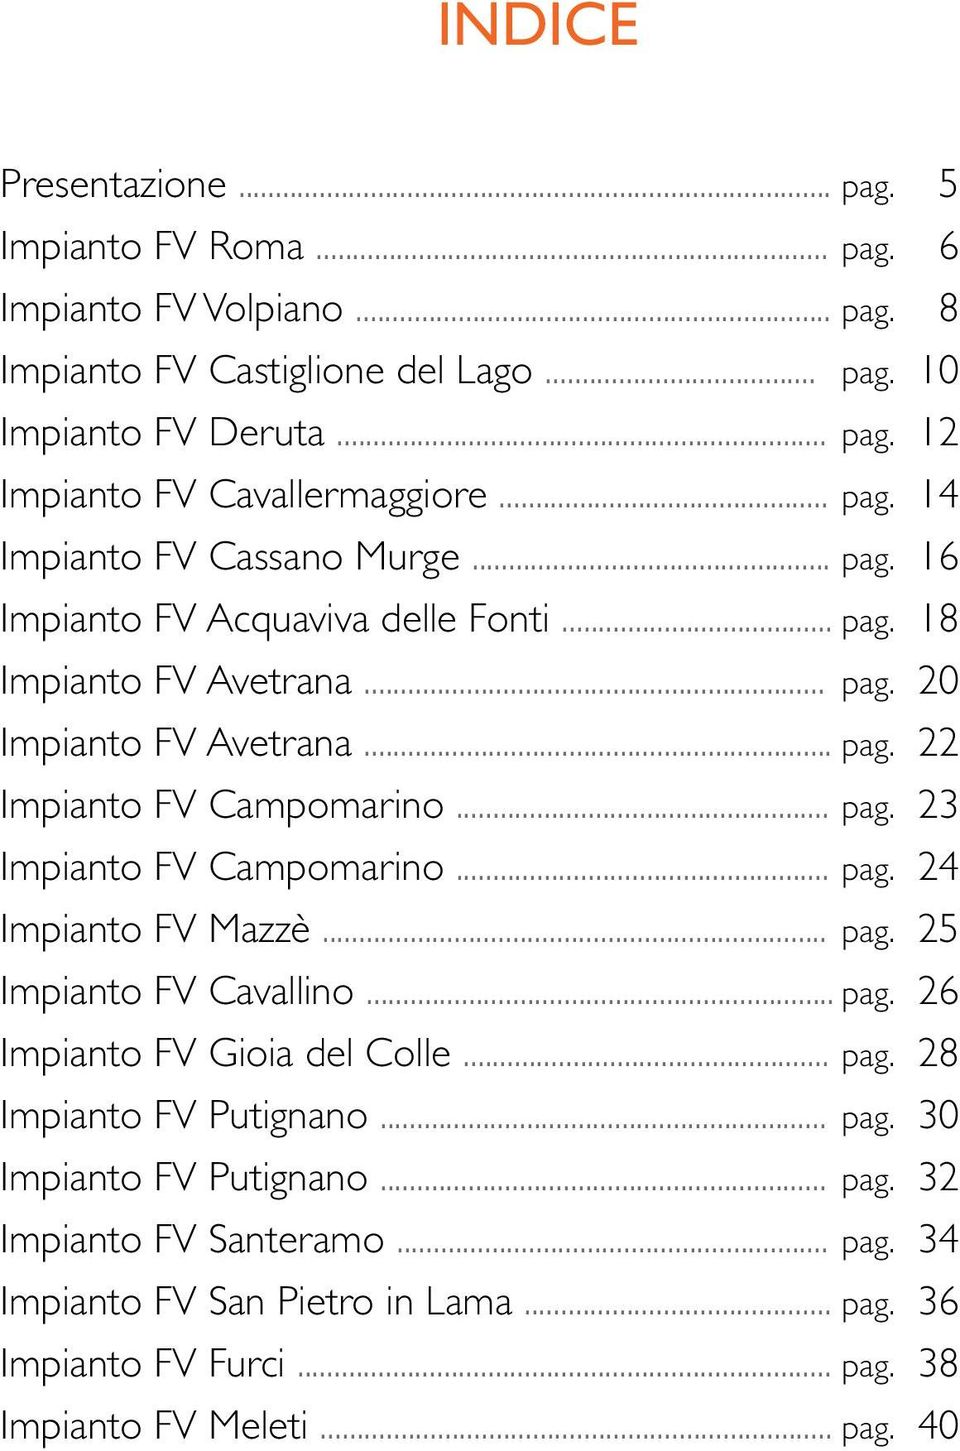 .. pag. 23 Impianto FV Campomarino... pag. 24 Impianto FV Mazzè... pag. 25 Impianto FV Cavallino... pag. 26 Impianto FV Gioia del Colle... pag. 28 Impianto FV Putignano... pag. 30 Impianto FV Putignano.